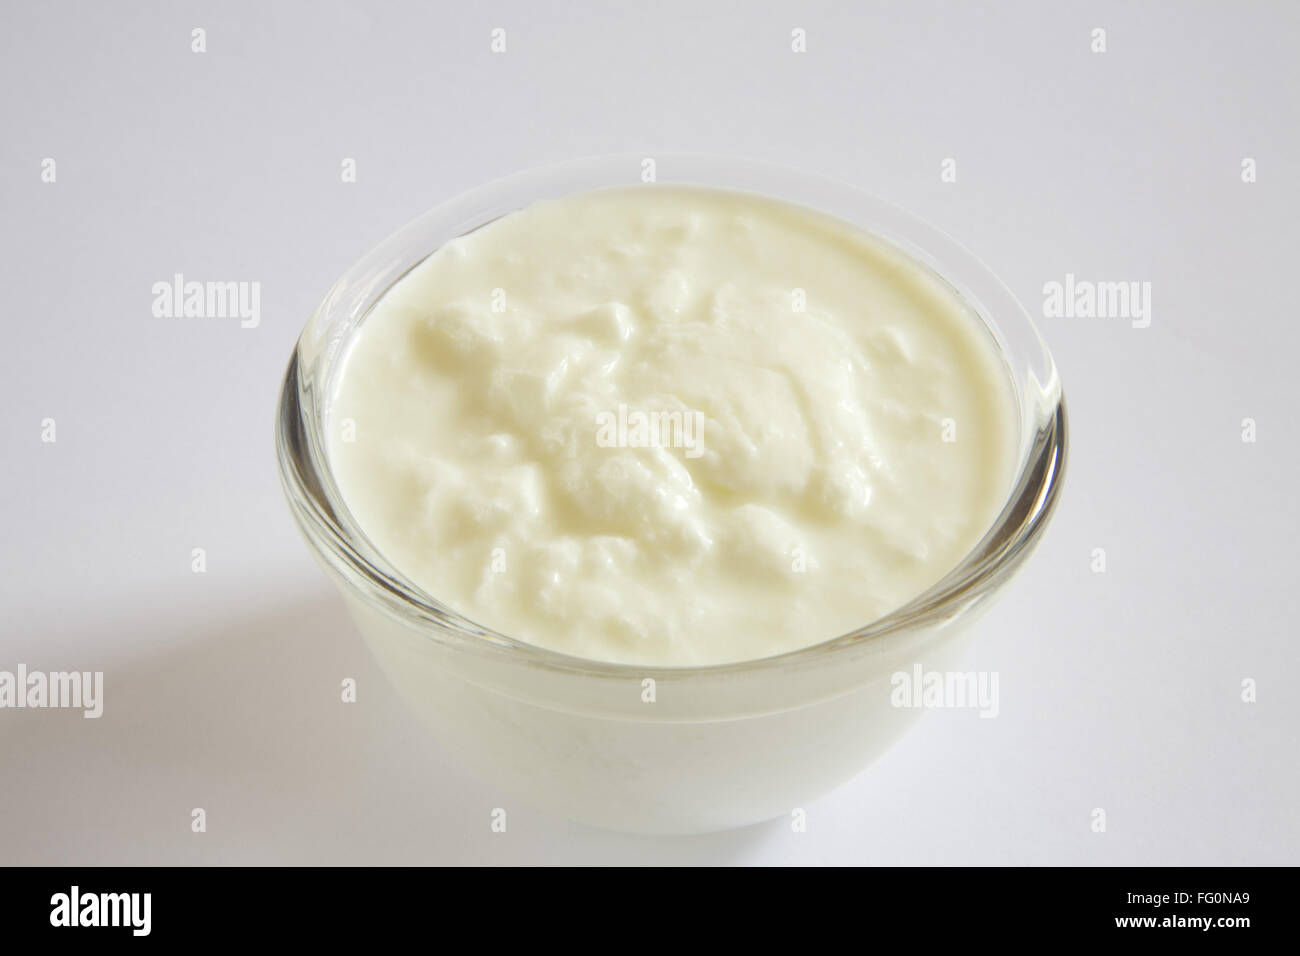 Curd yogurt dahi home or dairy product in bowls Stock Photo